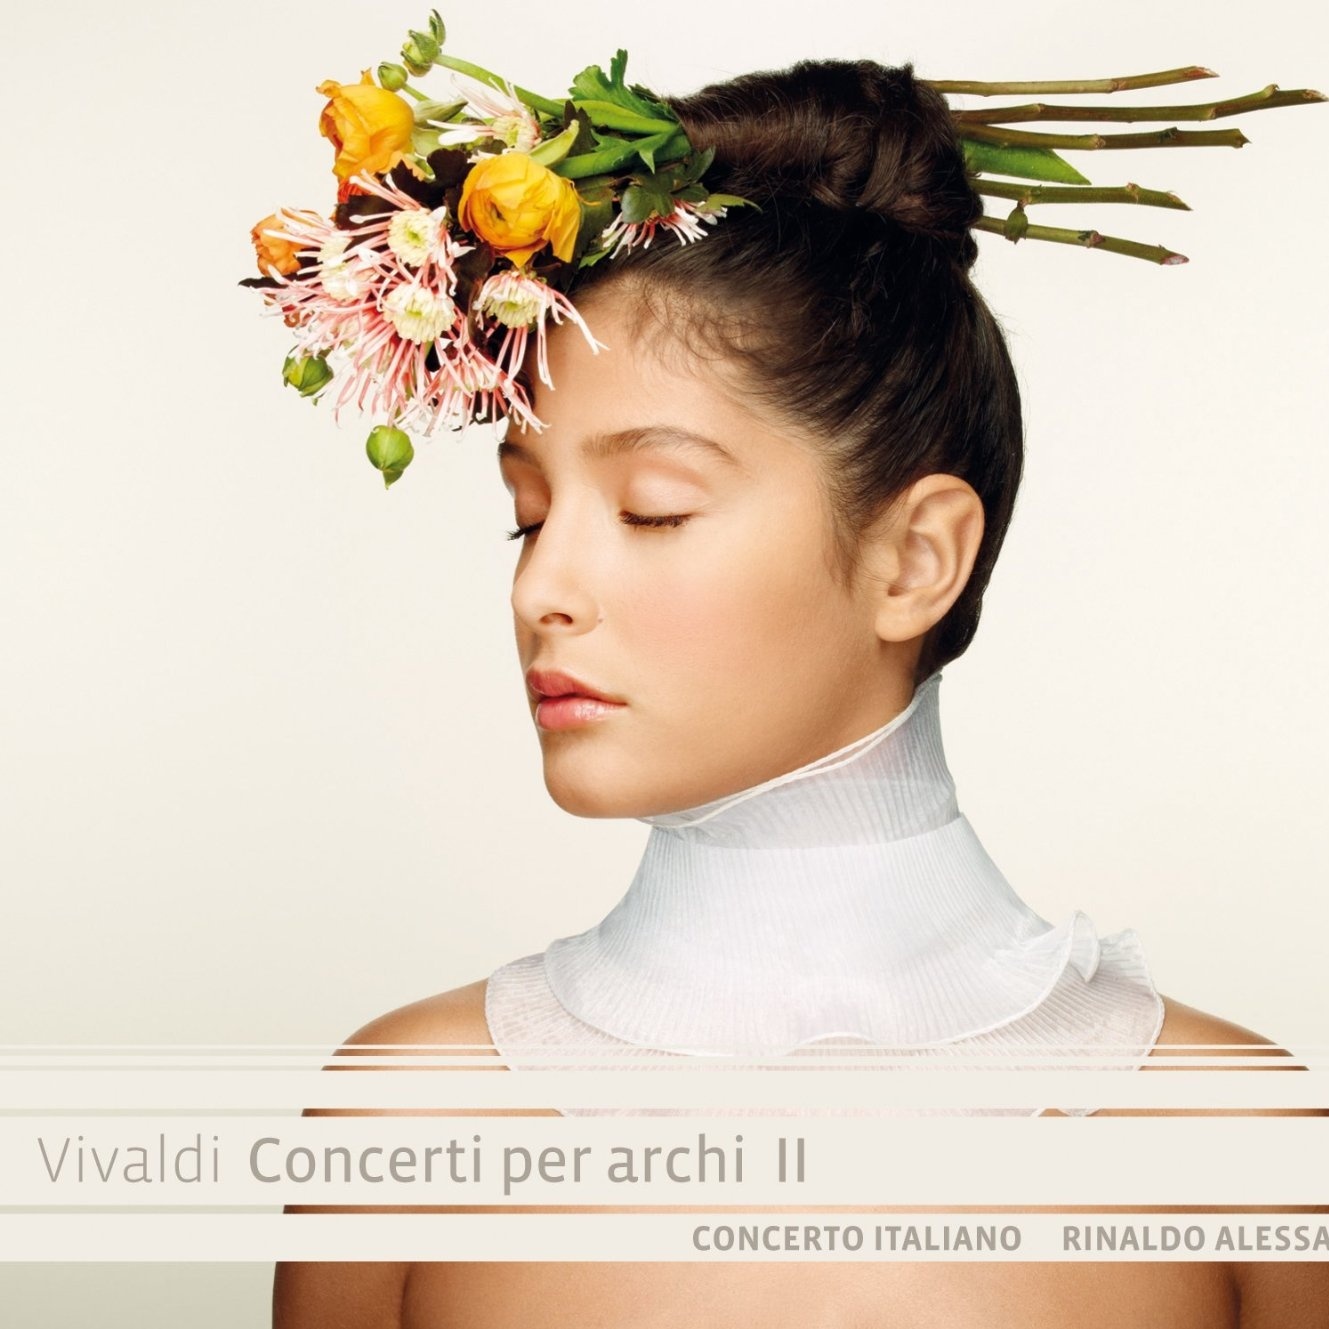 Antonio Vivaldi: Concerto in G Major, RV 151 " Alla rustica"  II. Adagio